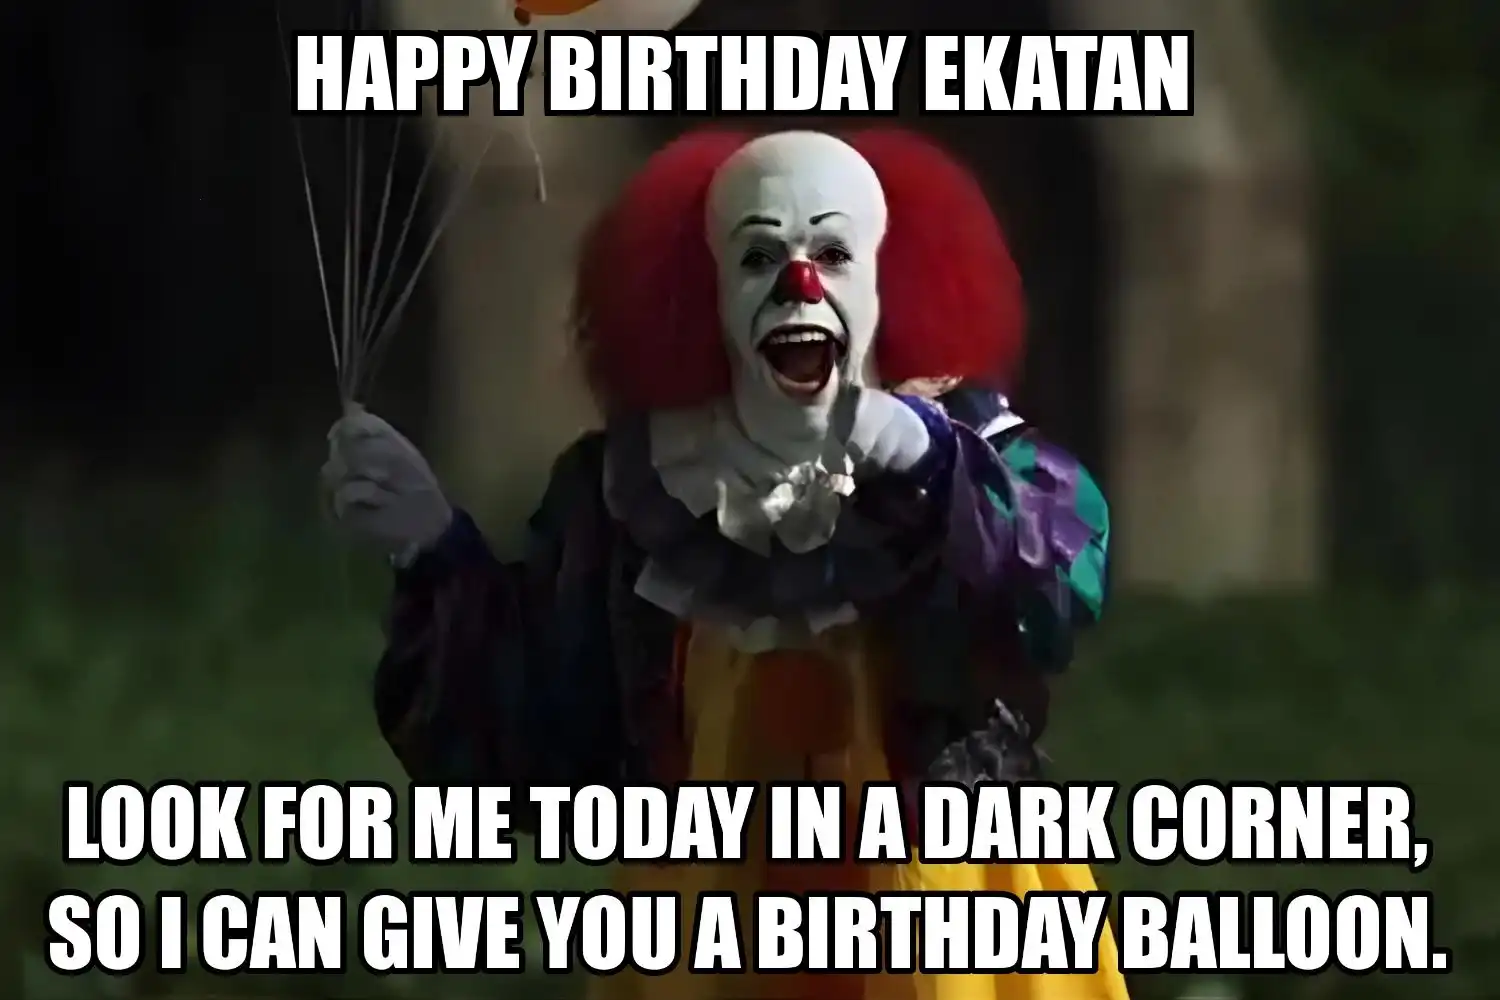 Happy Birthday Ekatan I Can Give You A Balloon Meme